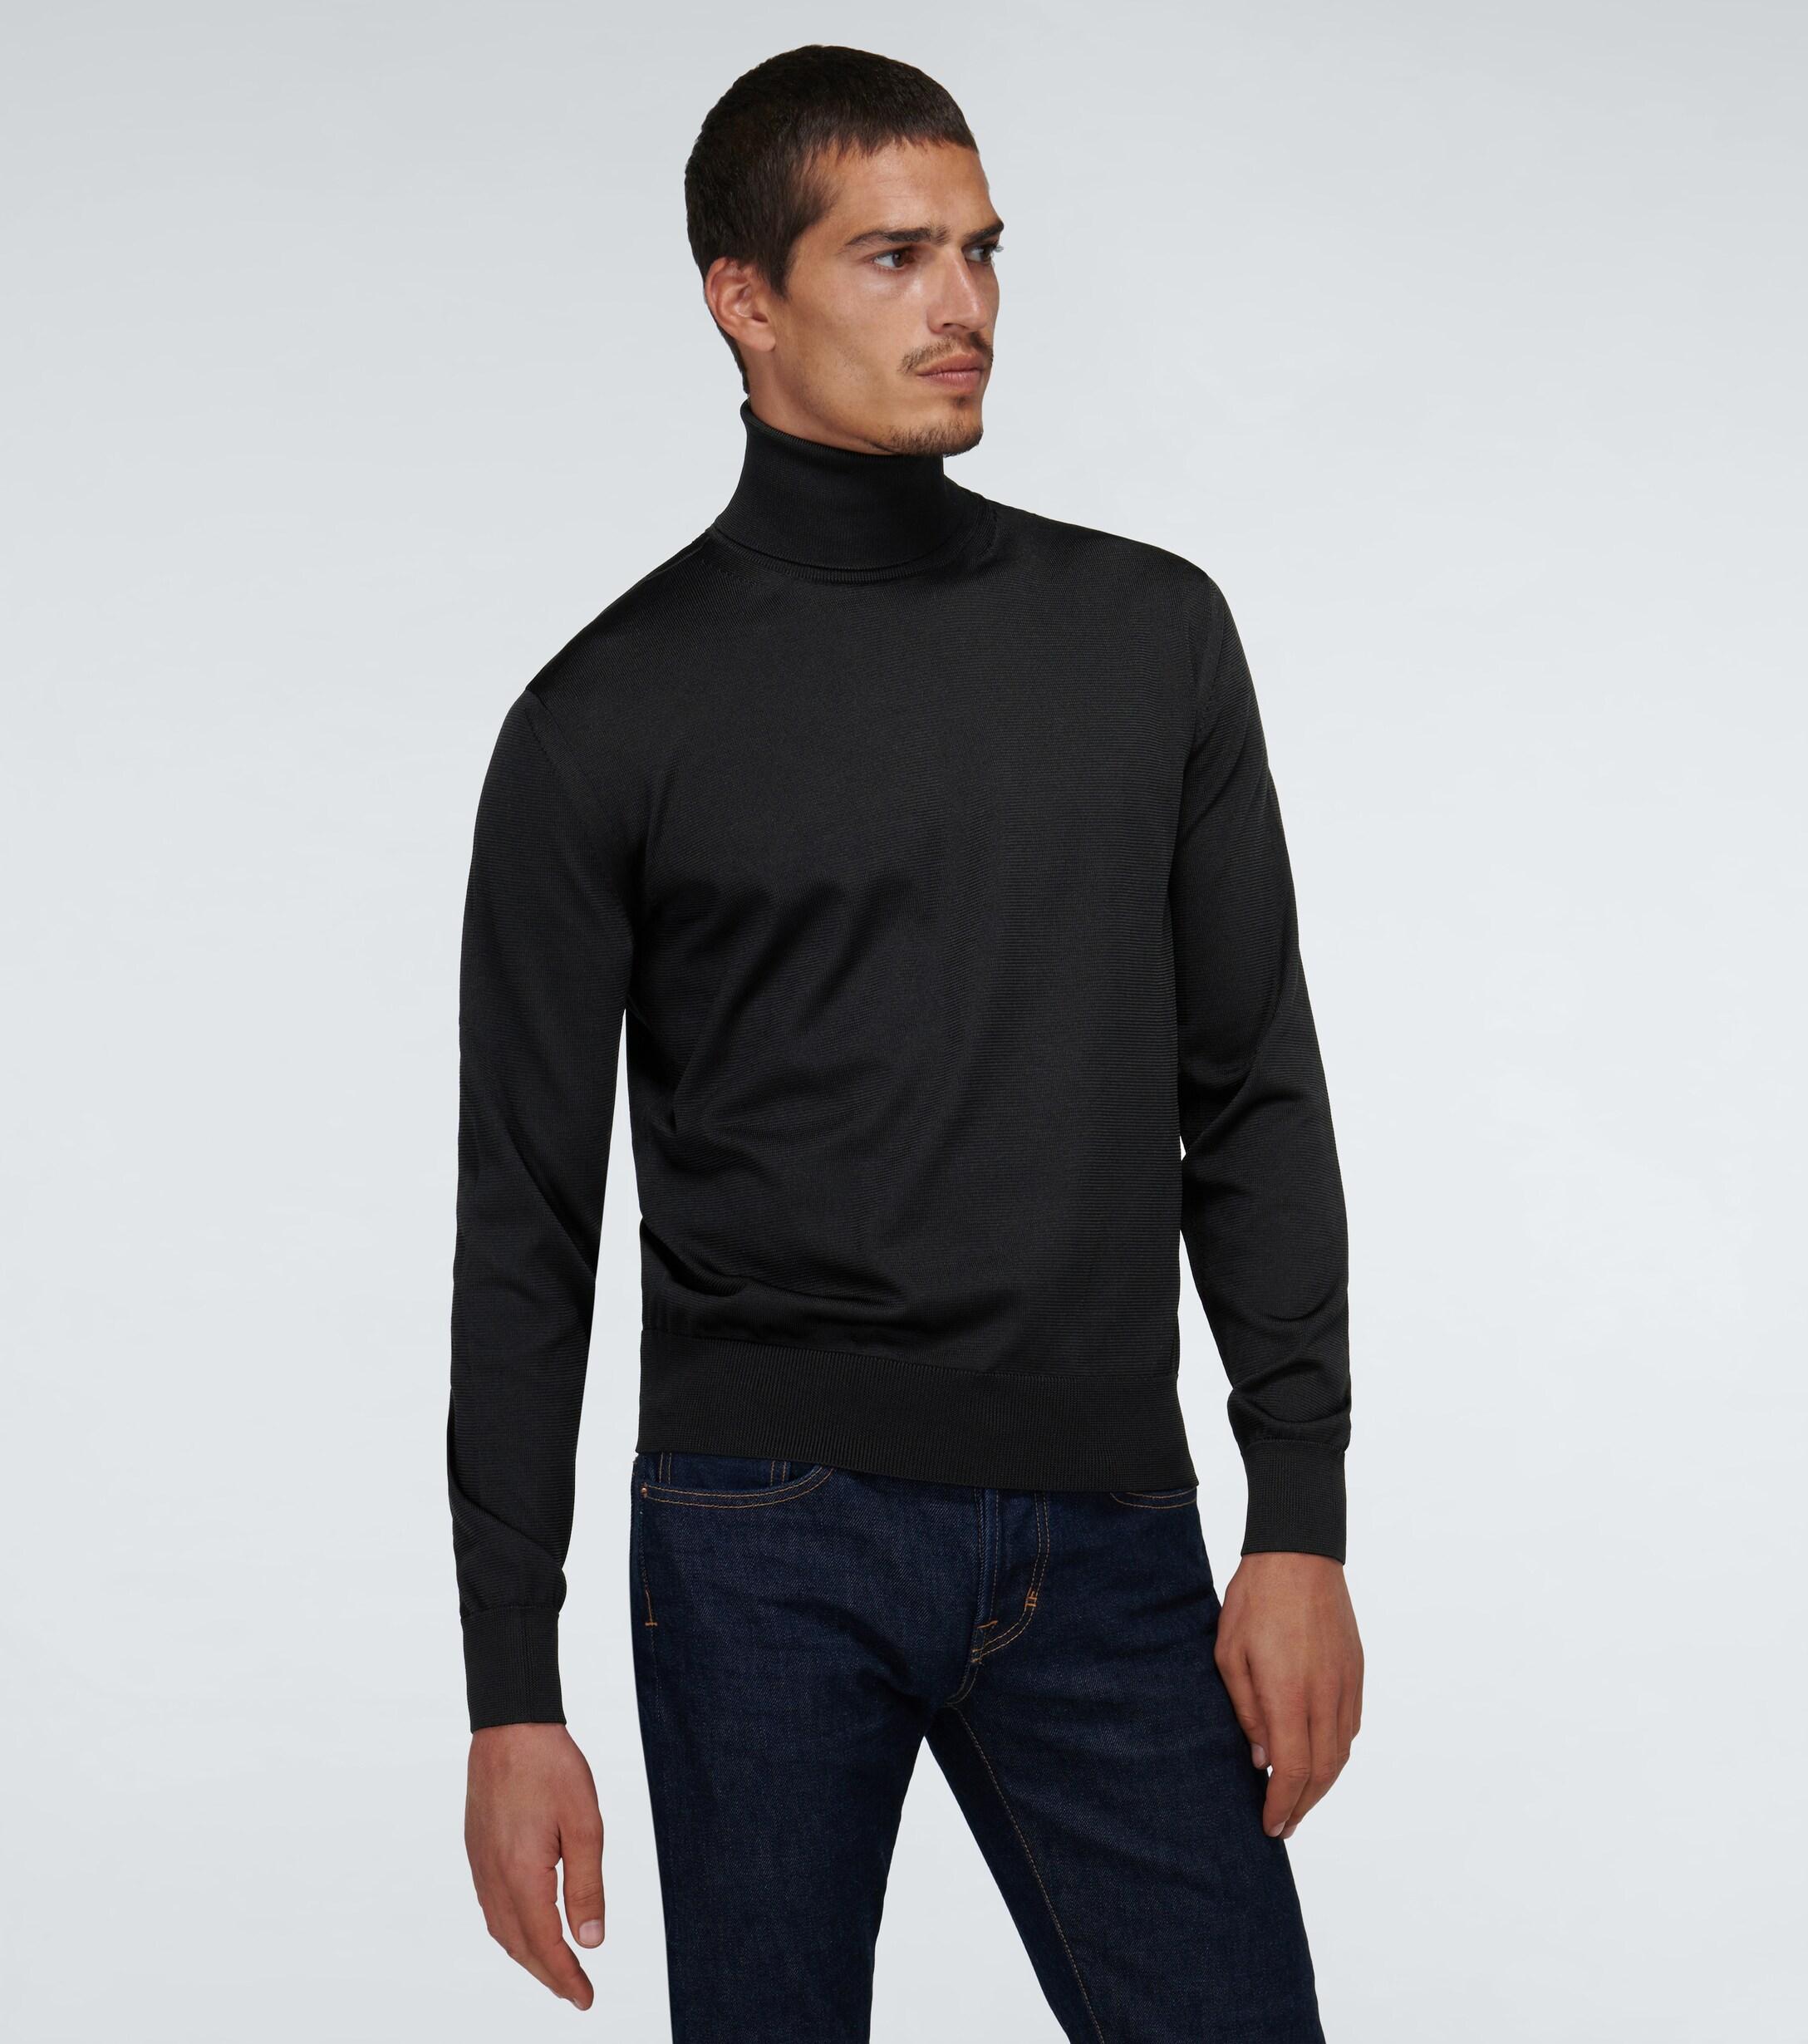 Tom Ford Long-sleeved Turtleneck Sweater in Black for Men - Lyst